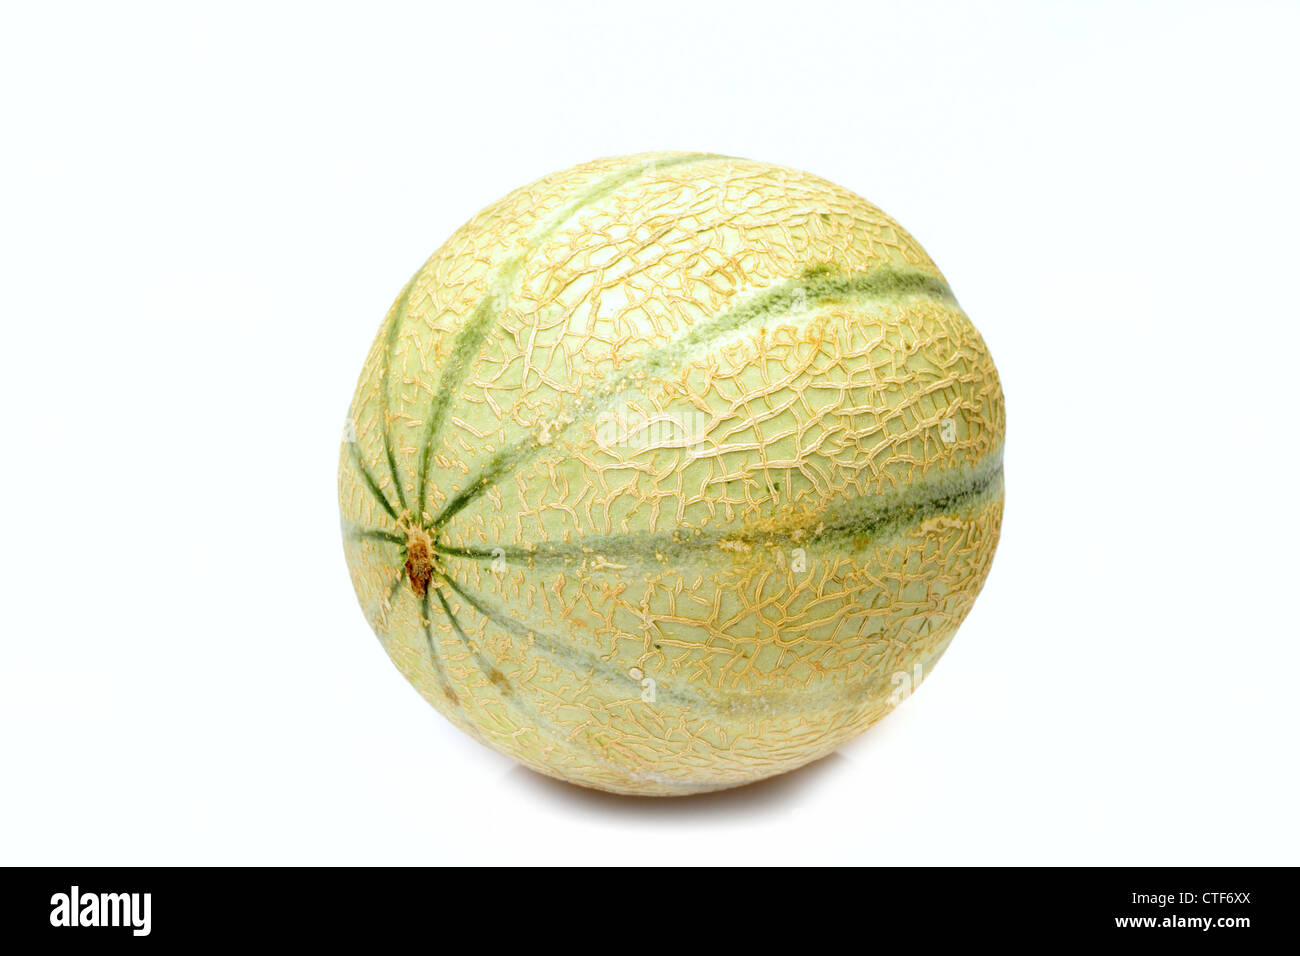 ripe melon, photo on the white background Stock Photo